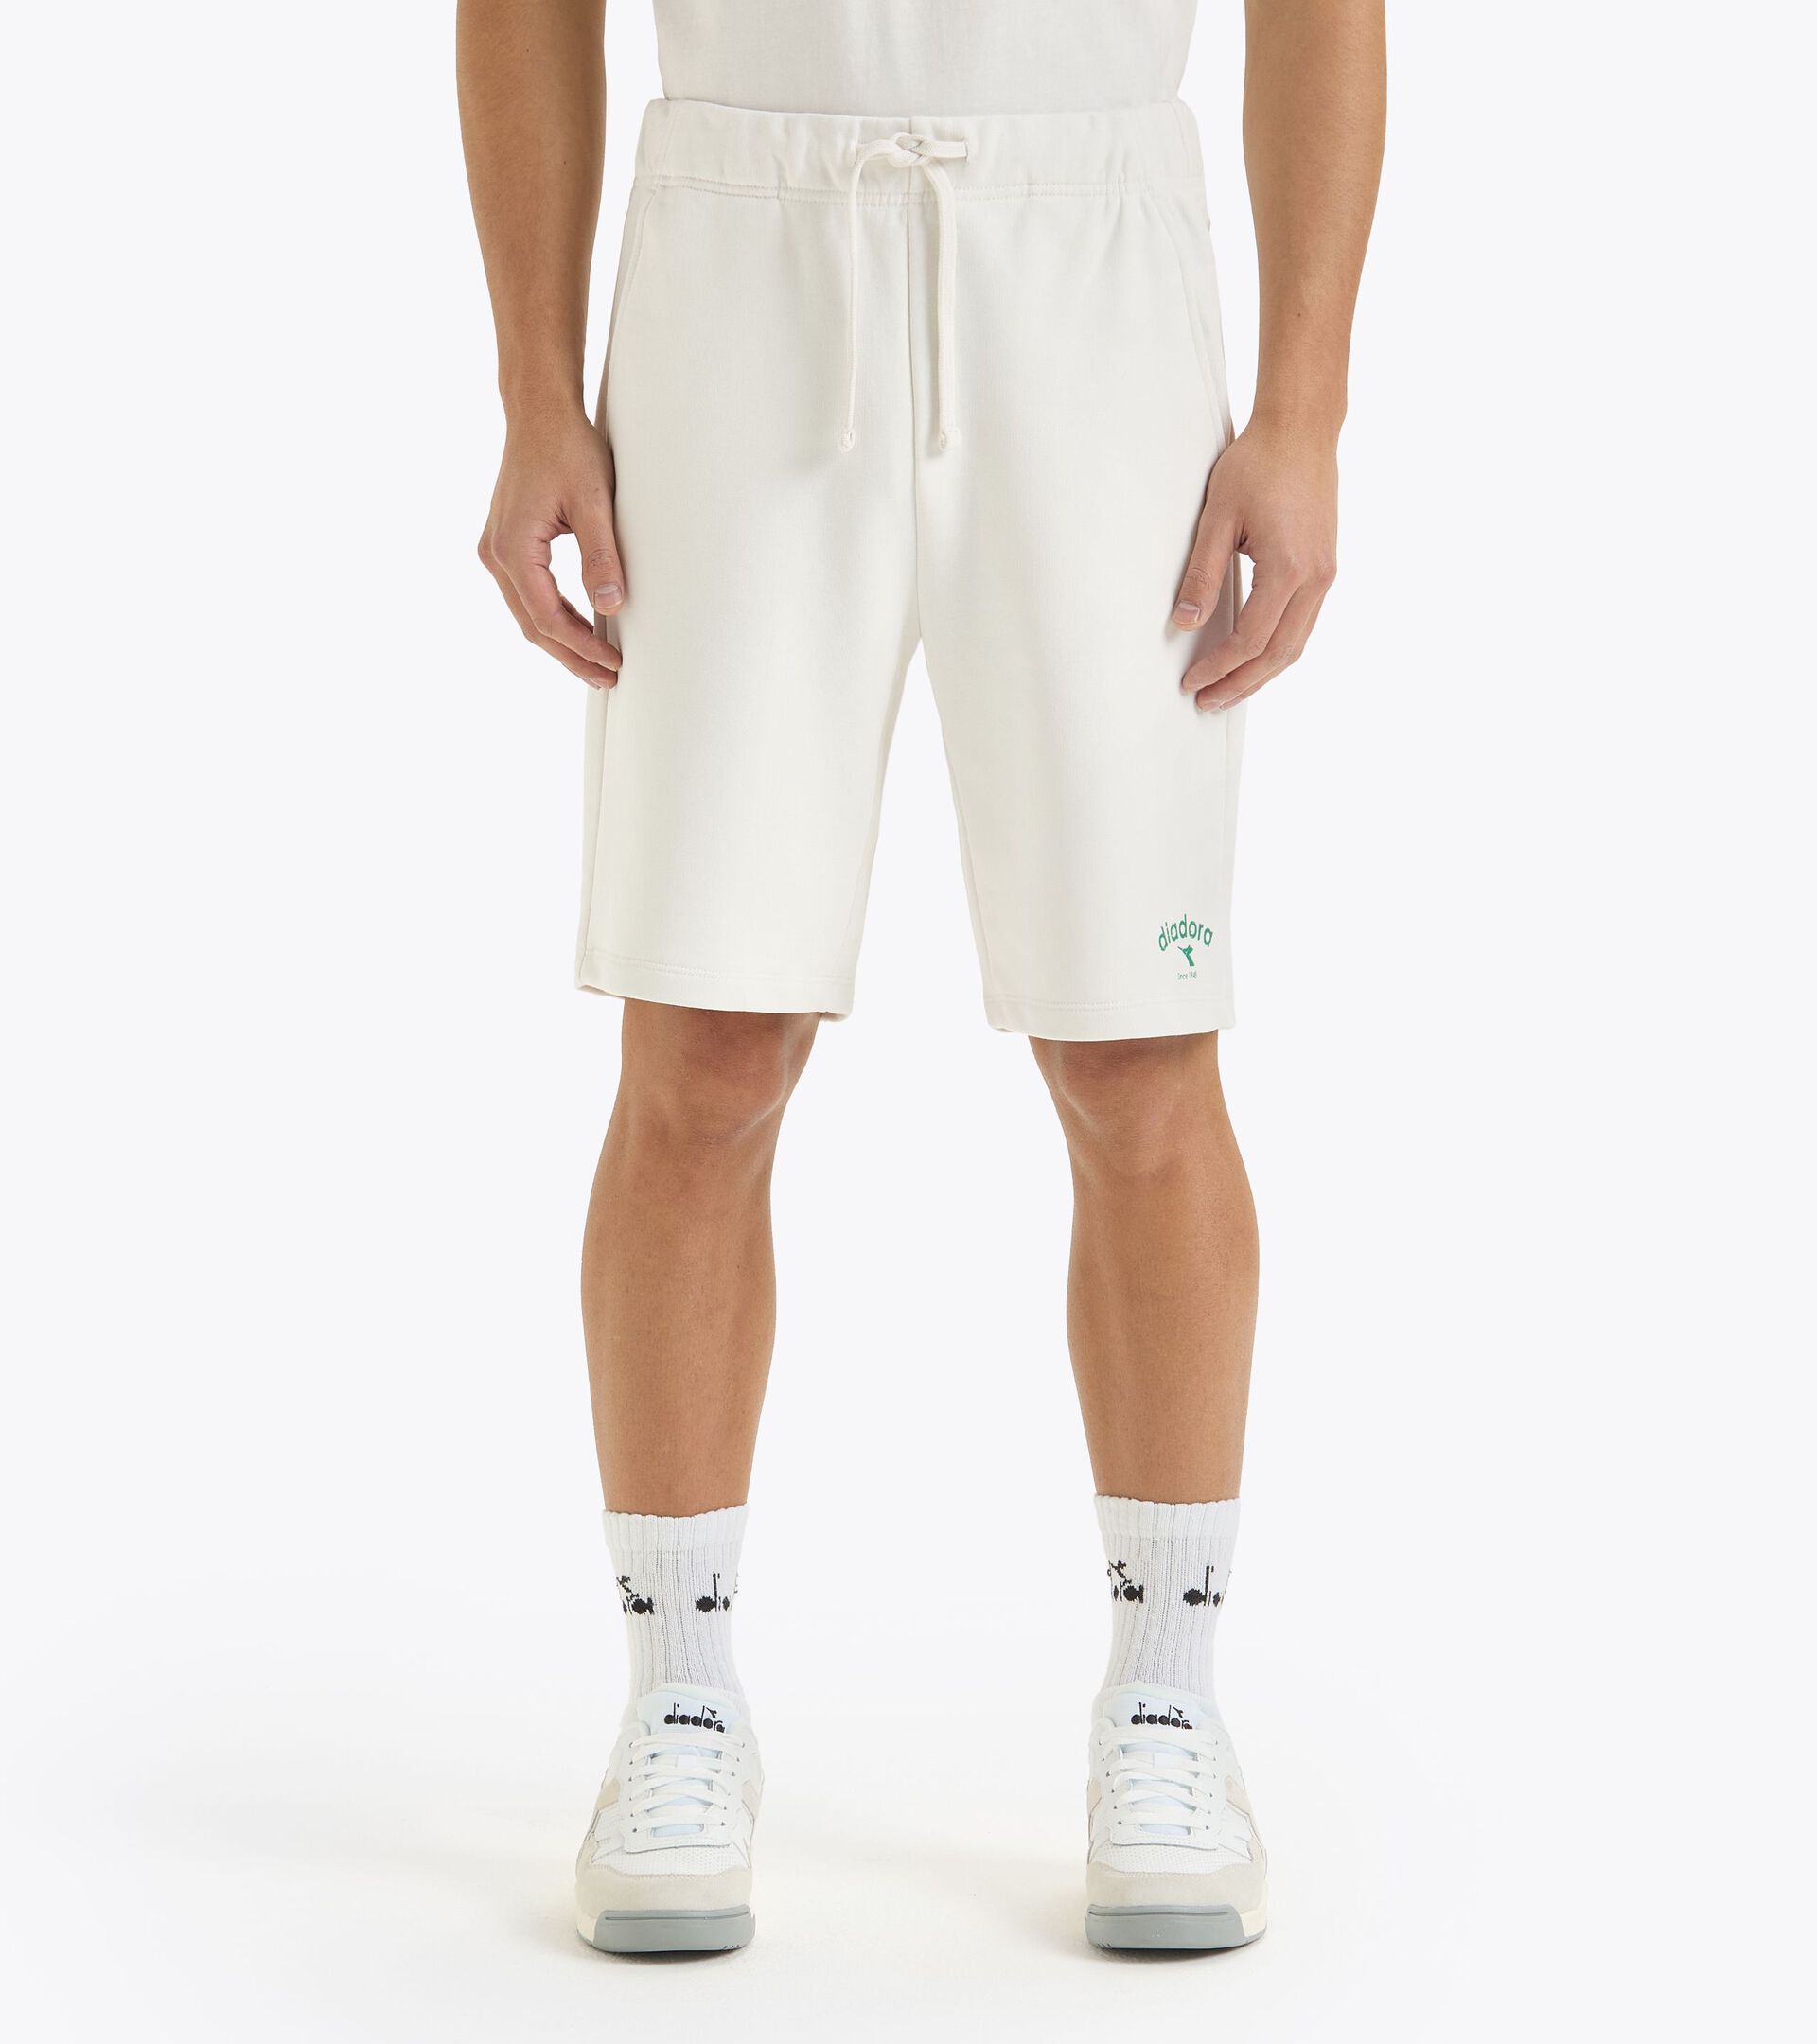 French terry cotton bermuda shorts - Gender Neutral BERMUDA ATHL. LOGO WHITE MILK - Diadora